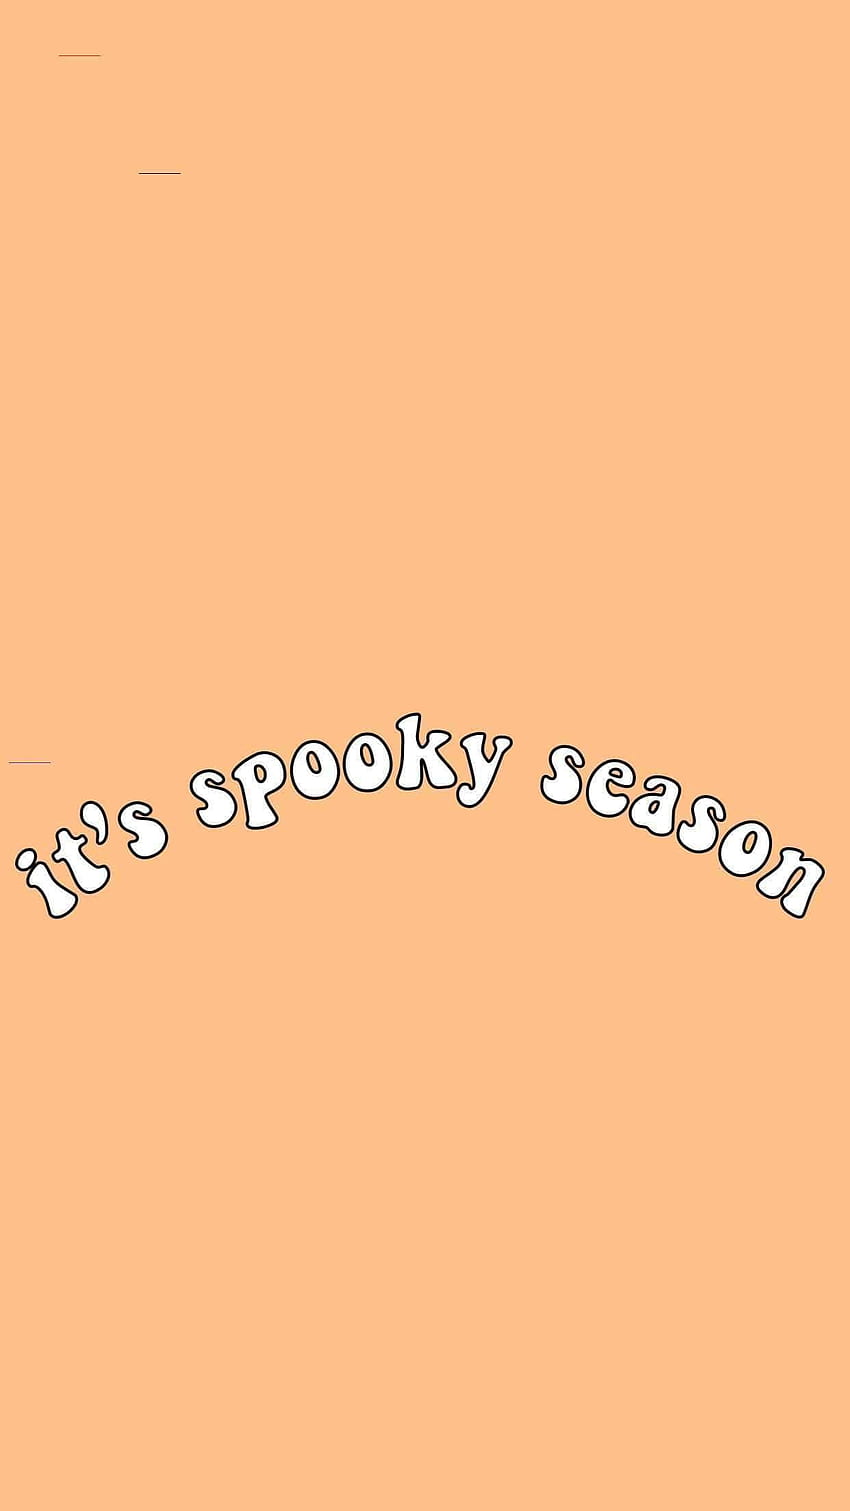 Spooky Season iPhone - Awesome HD phone wallpaper